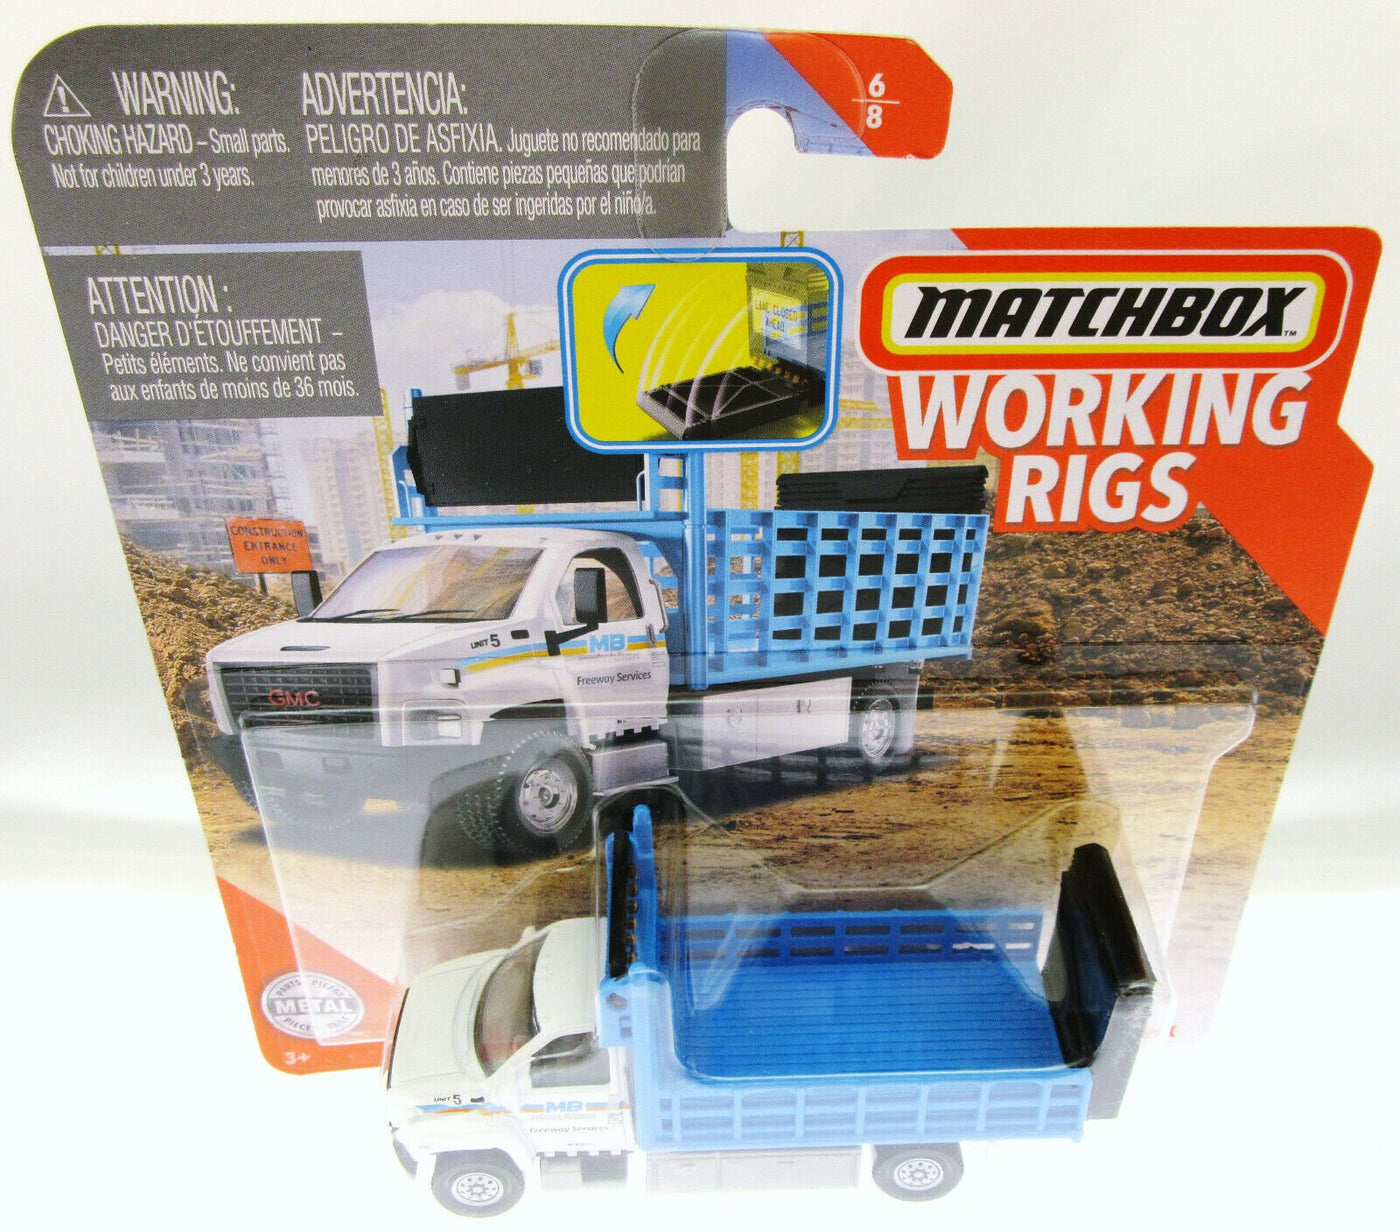 Matchbox Working Rigs ~ GMC 3500 Attenuator Truck ~ Metal